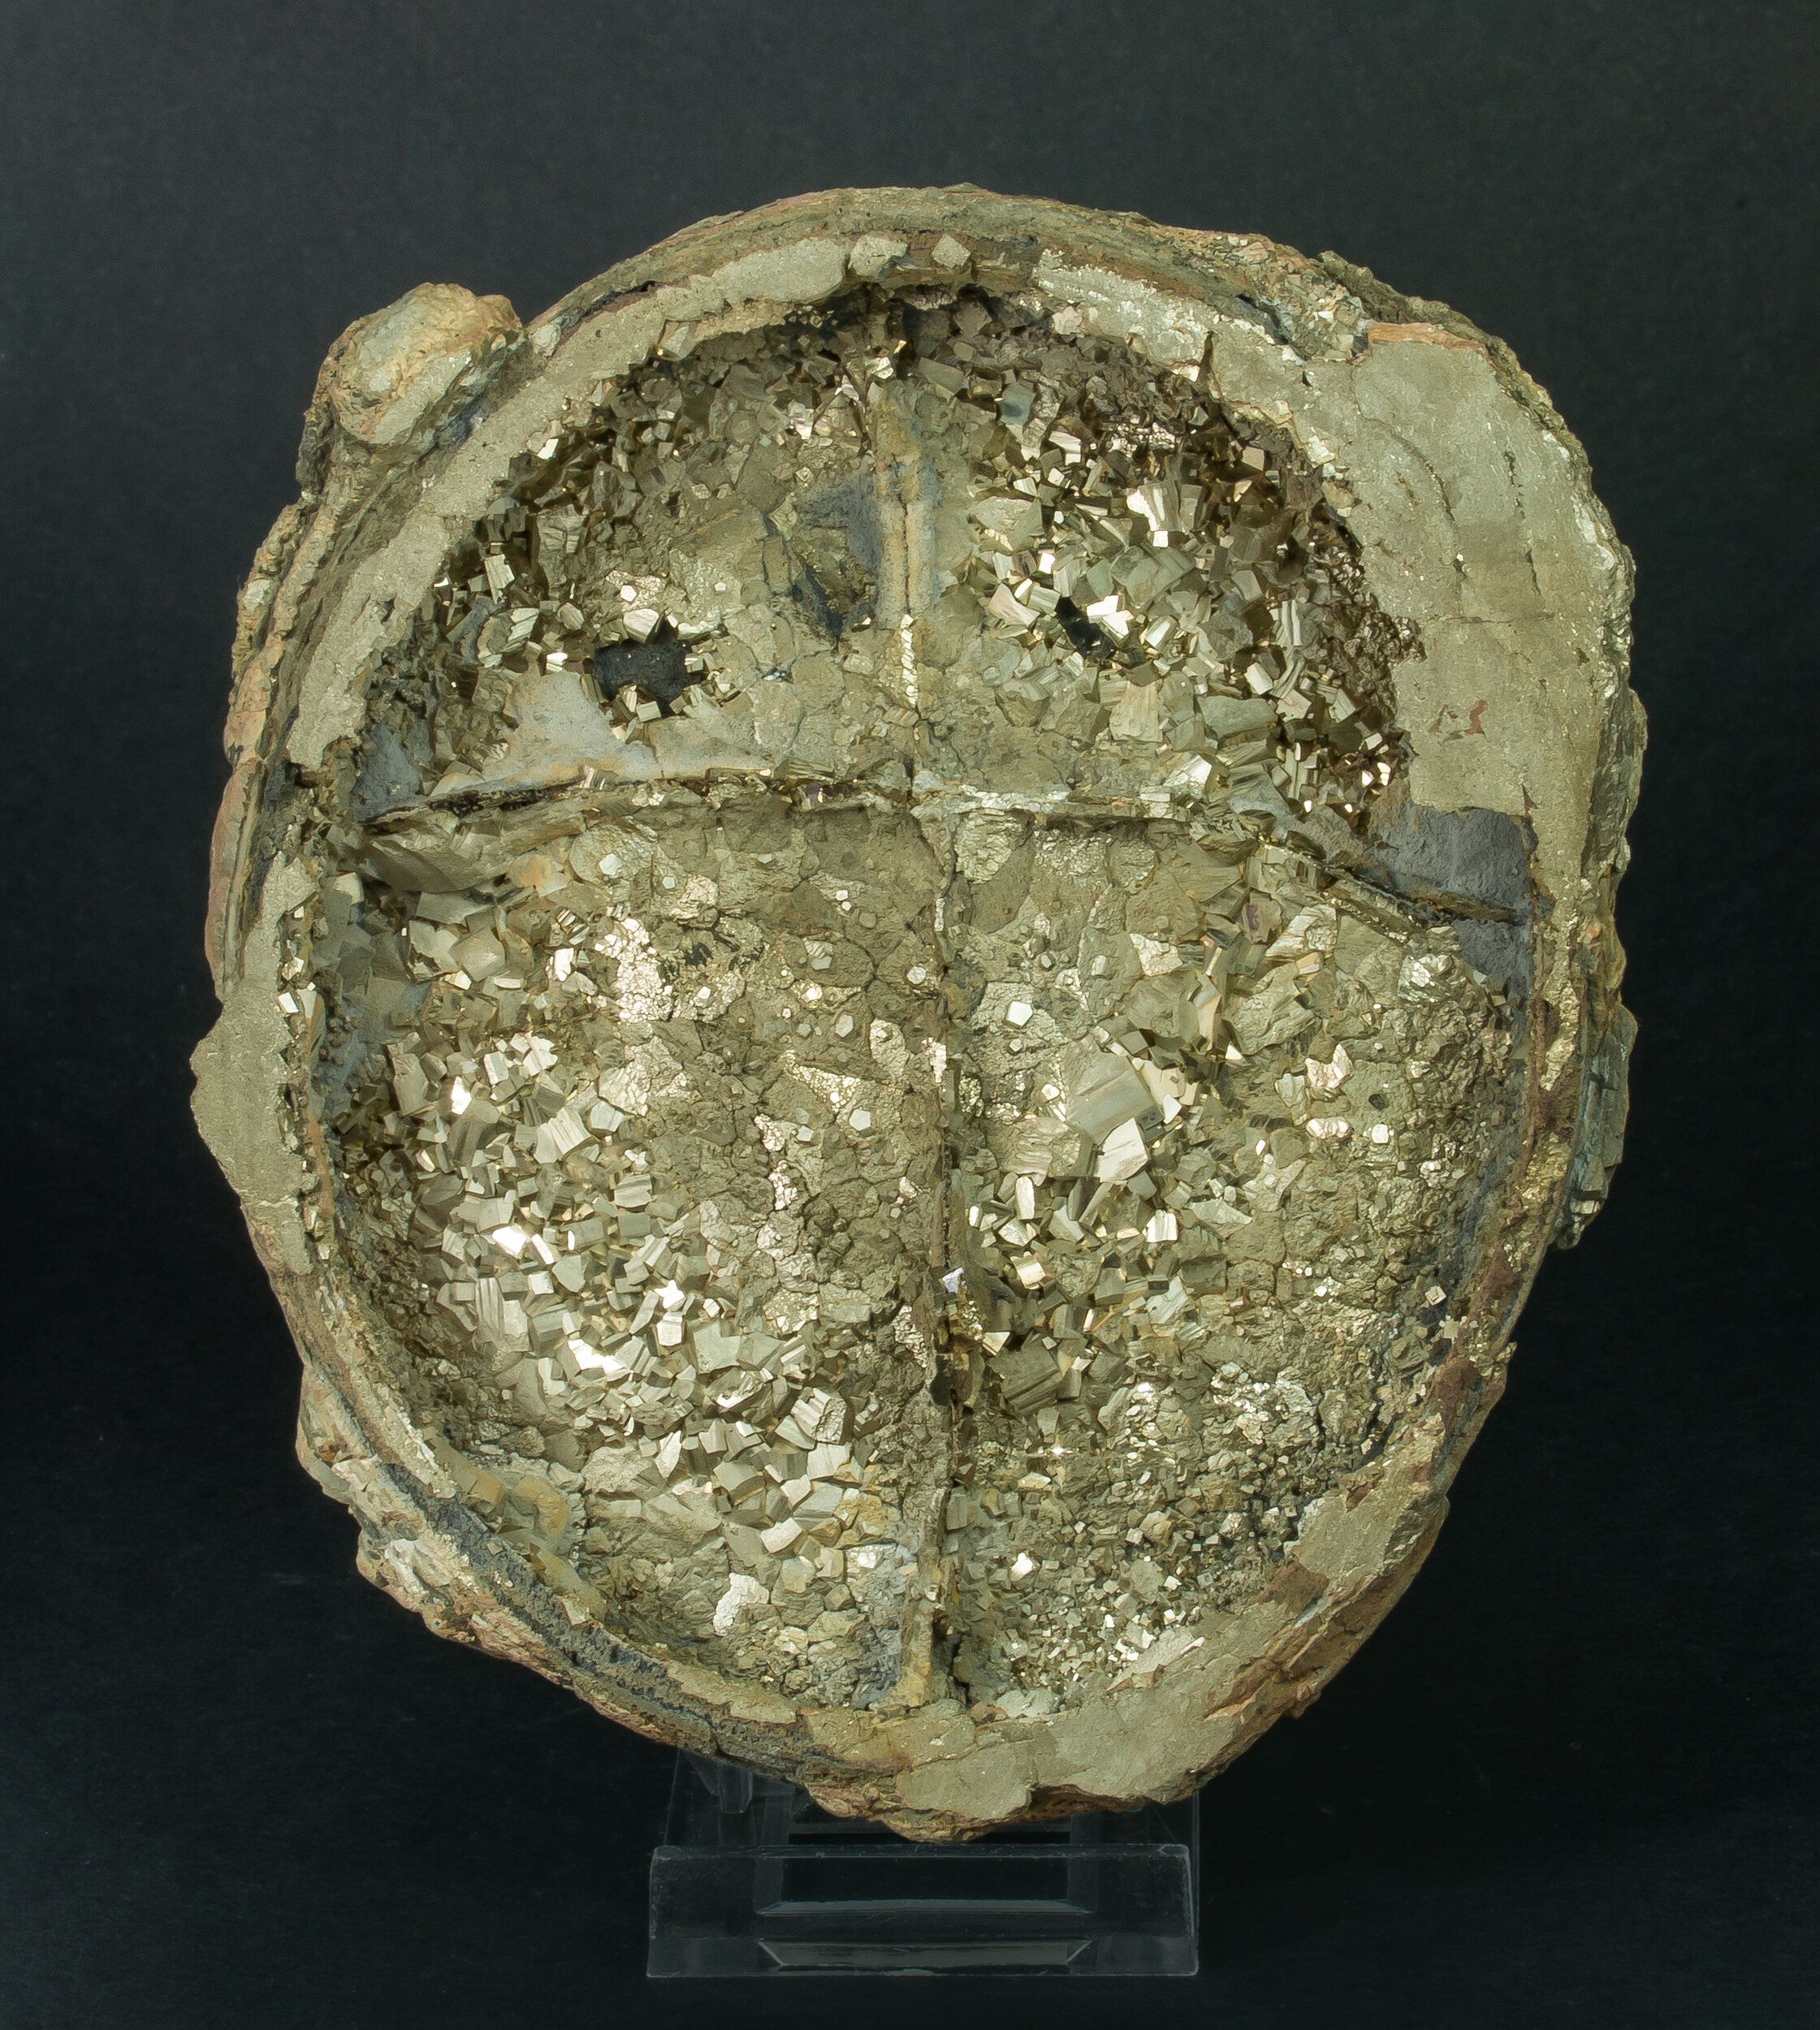 specimens/s_imagesAQ1/Pyrite-EPX98AQ1f.jpg